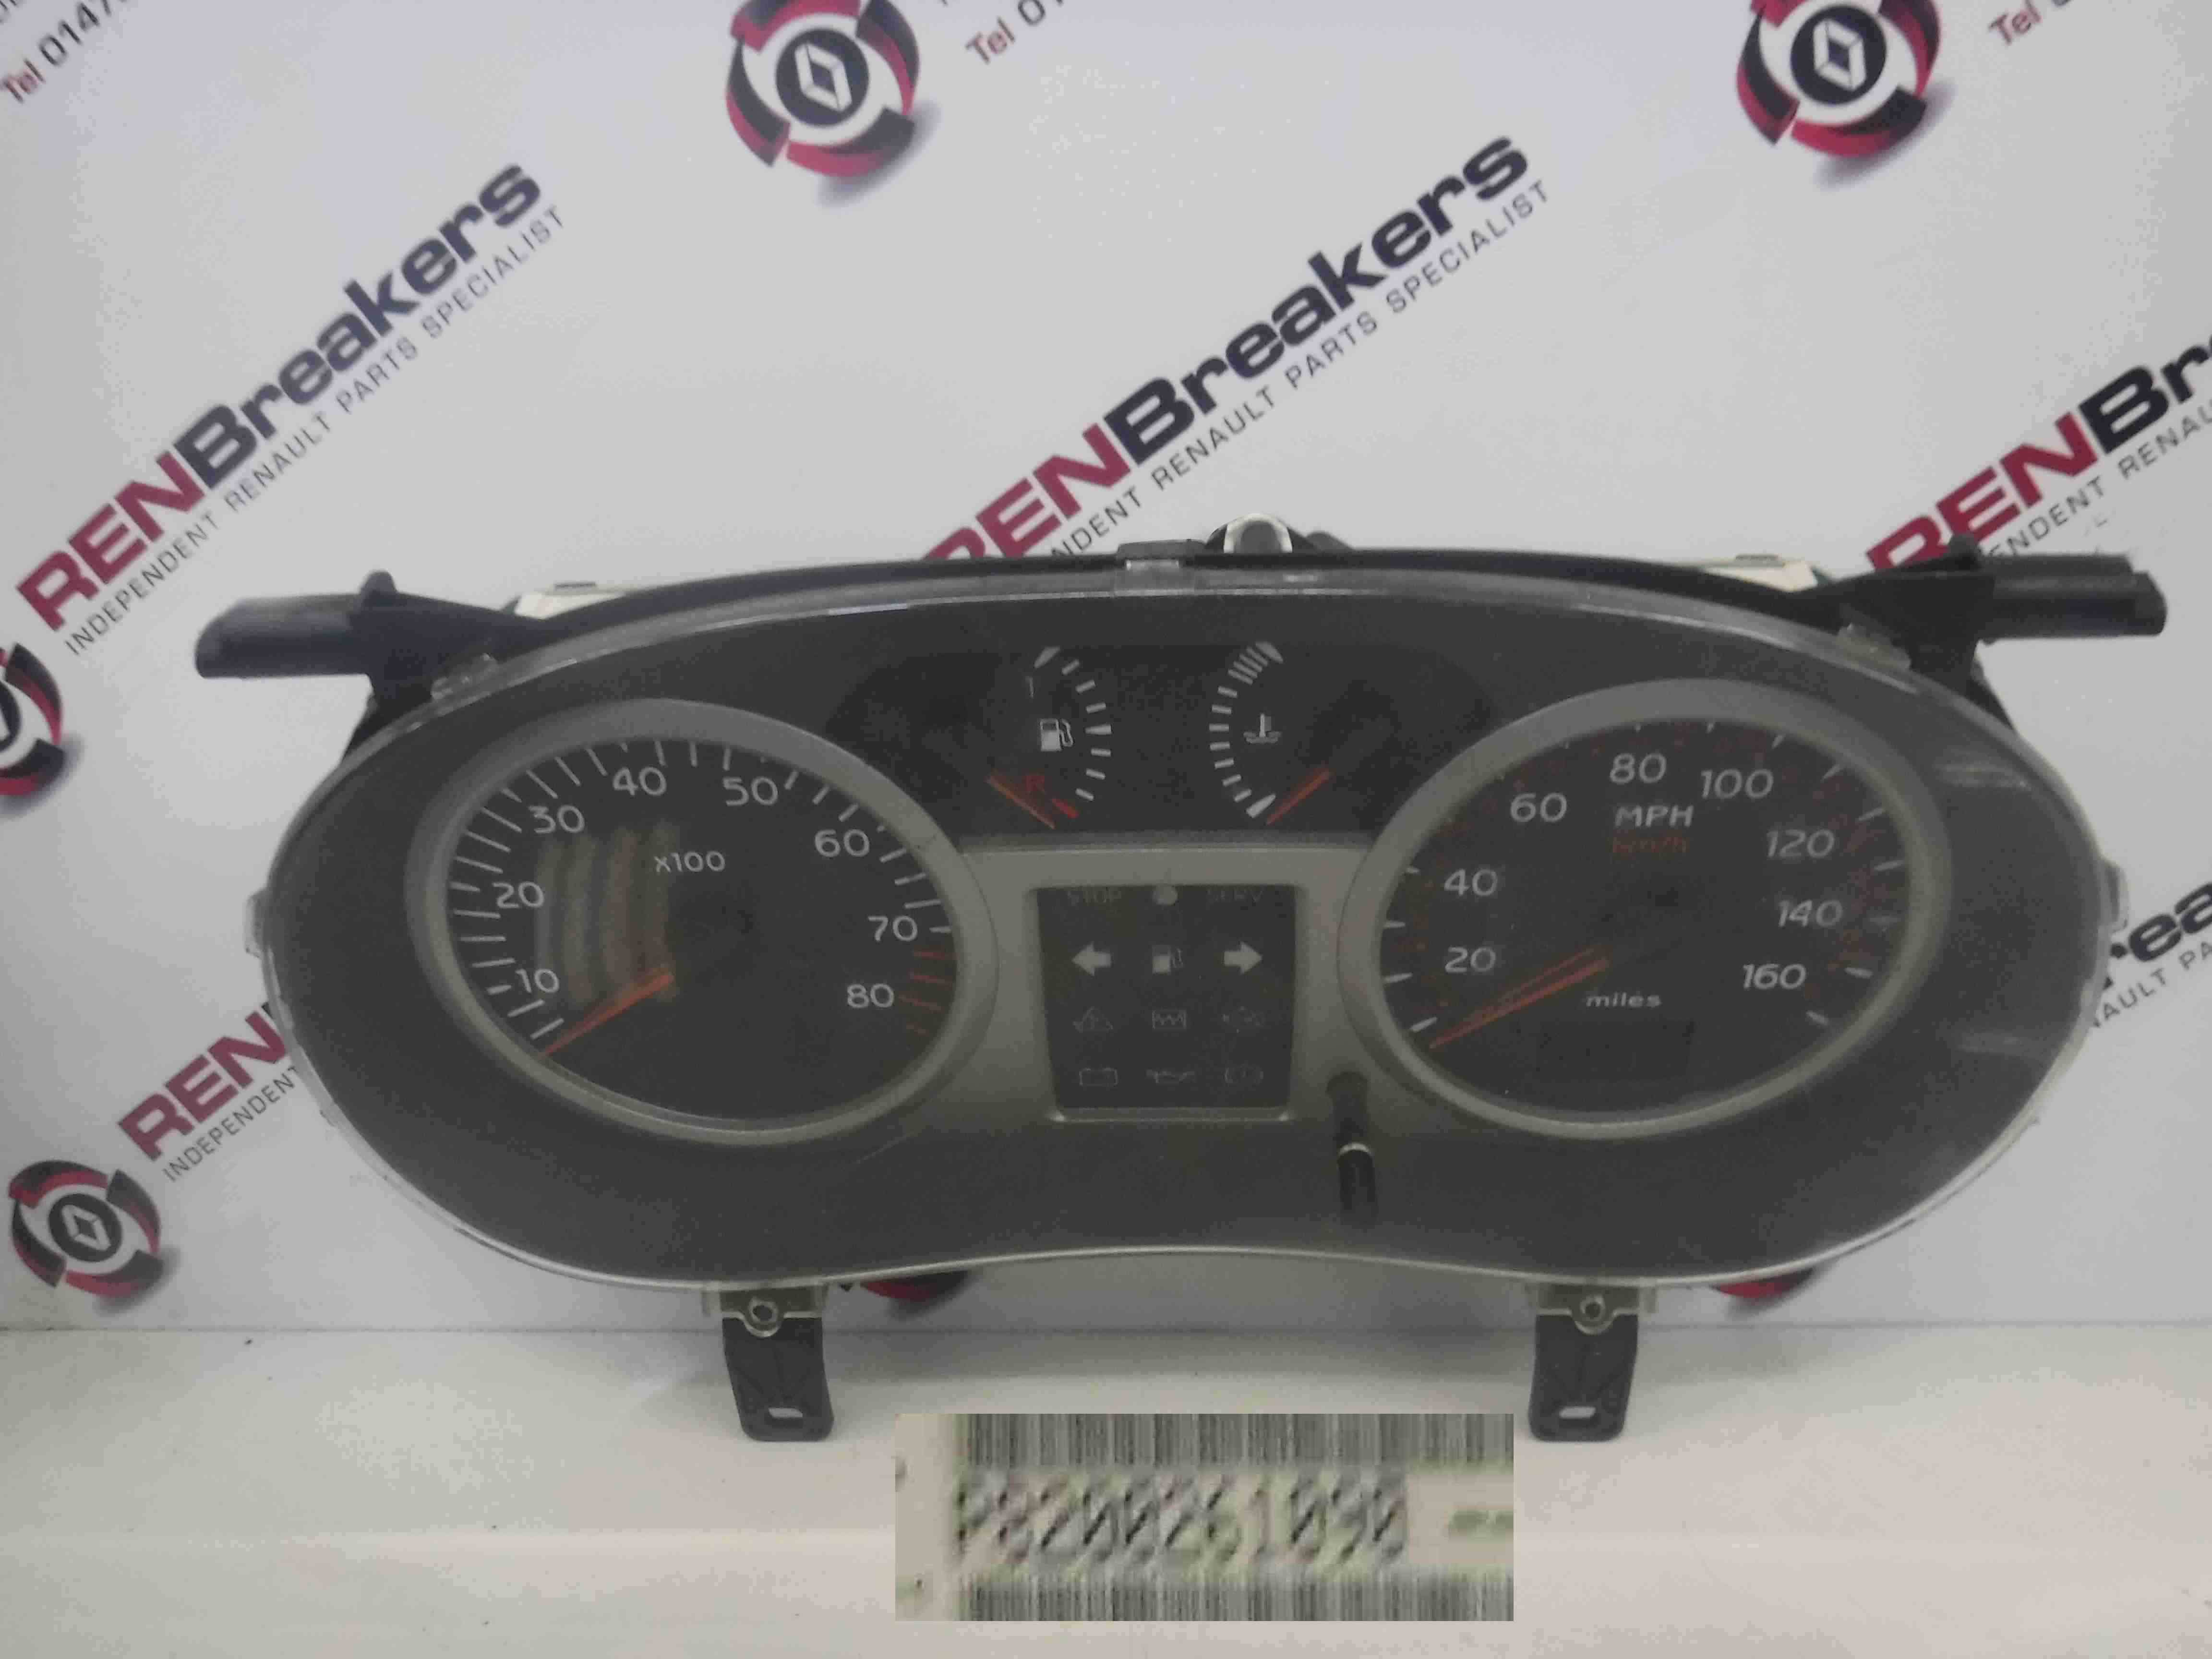 Renault Clio Sport 2001-2006 Instrument Panel Dials Clocks 97K 8200261090